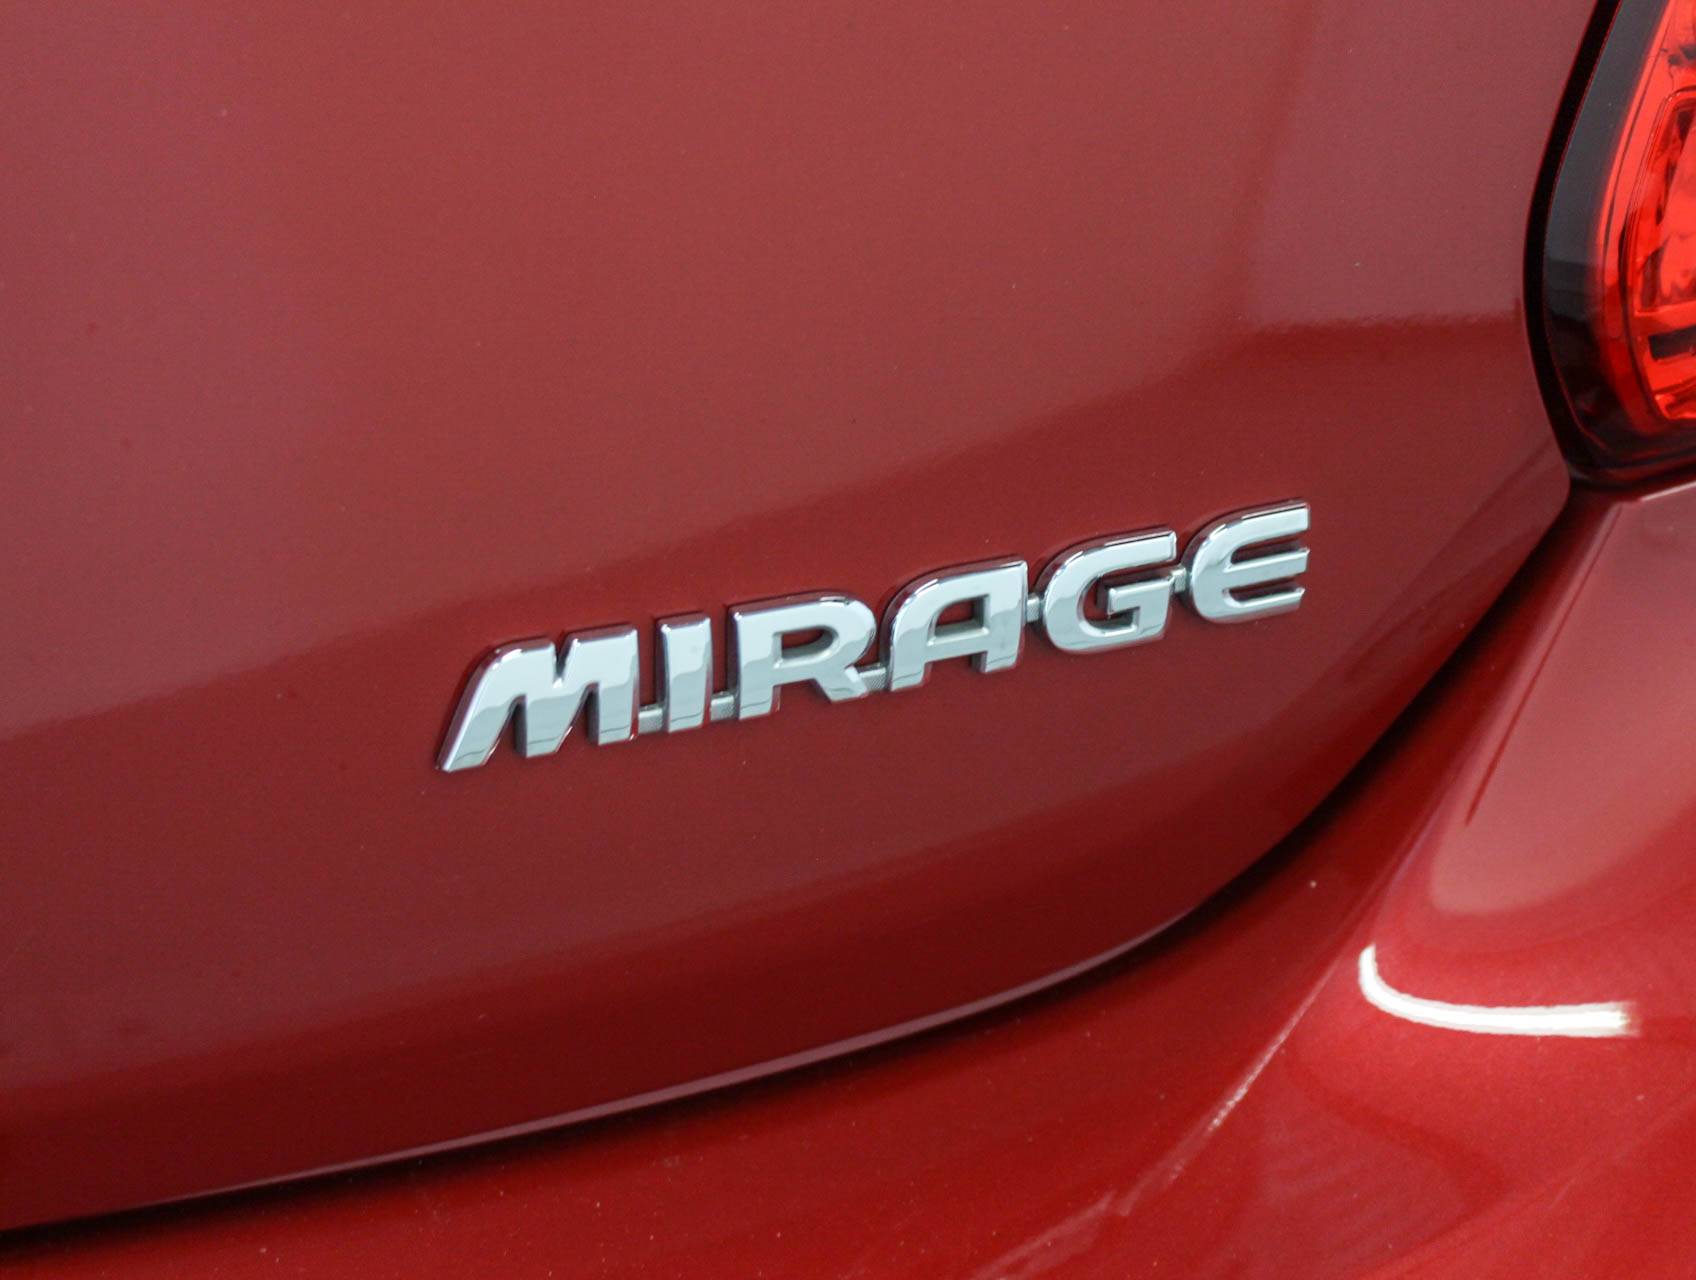 Florida Fine Cars - Used MITSUBISHI MIRAGE 2017 MARGATE Es